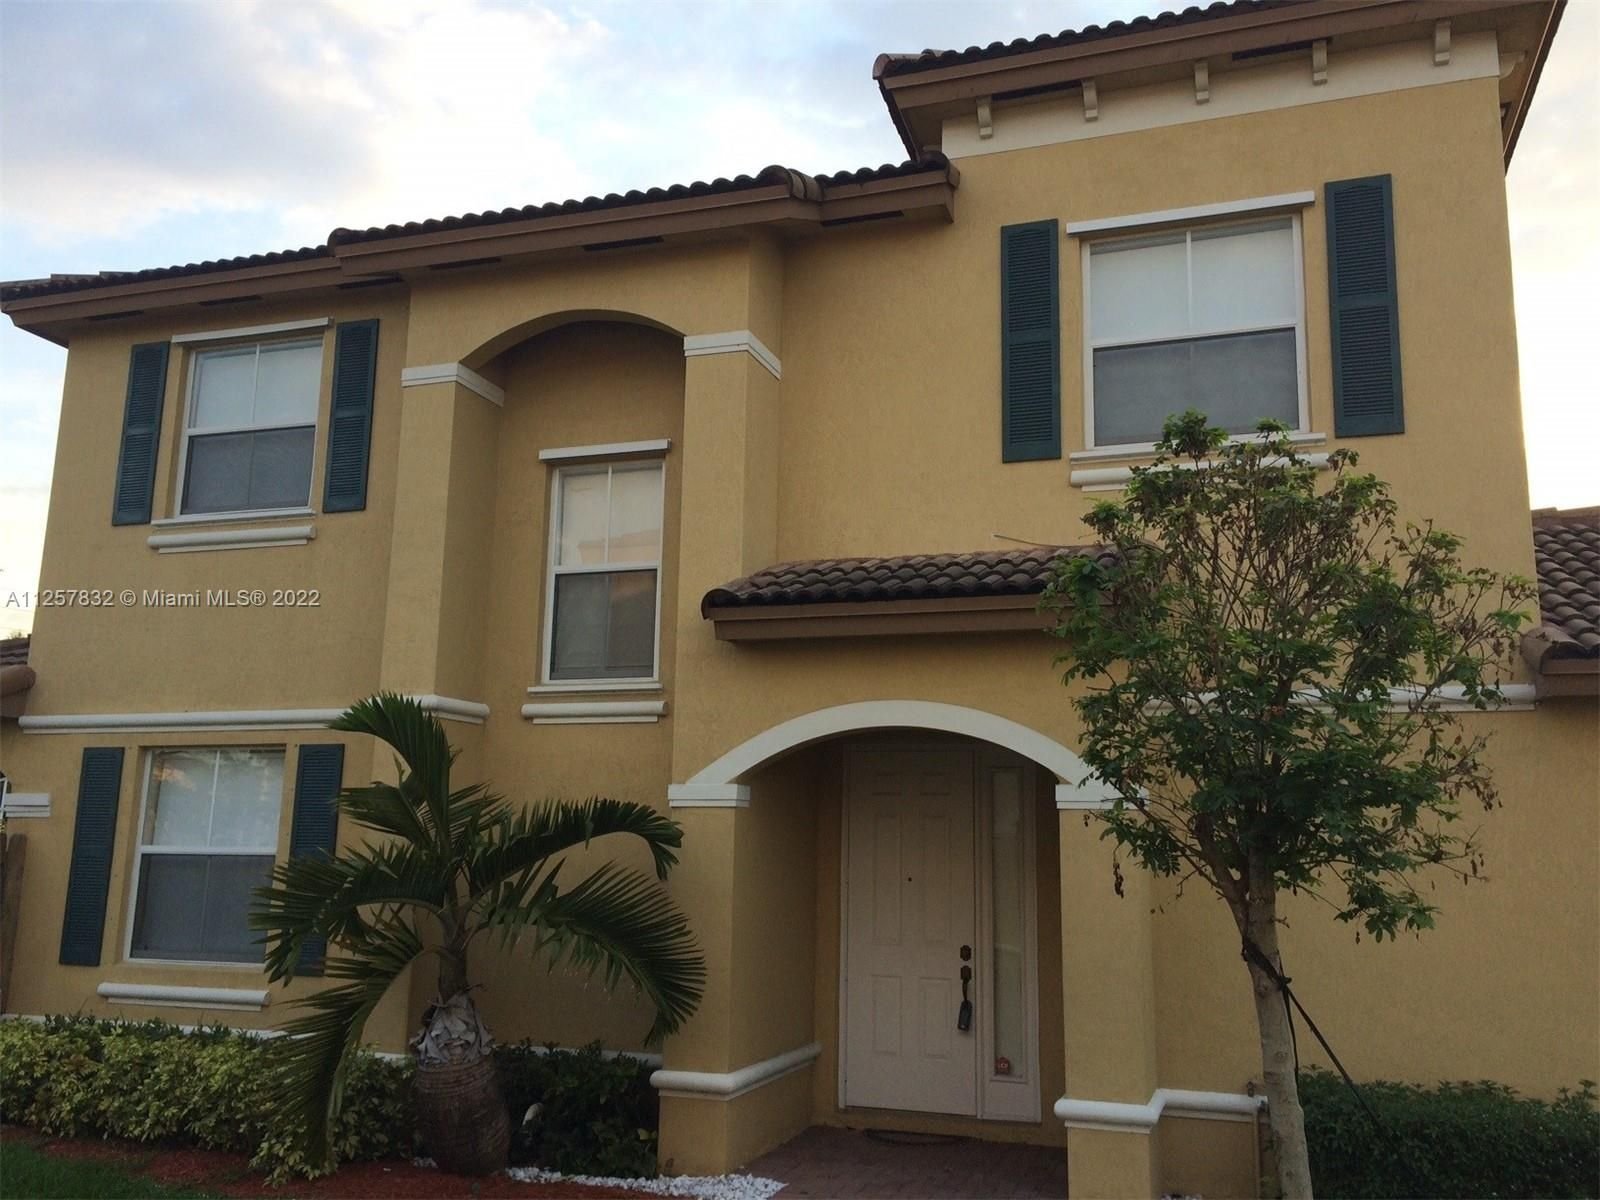 Real estate property located at 15271 88th Ter #15271, Miami-Dade County, Miami, FL